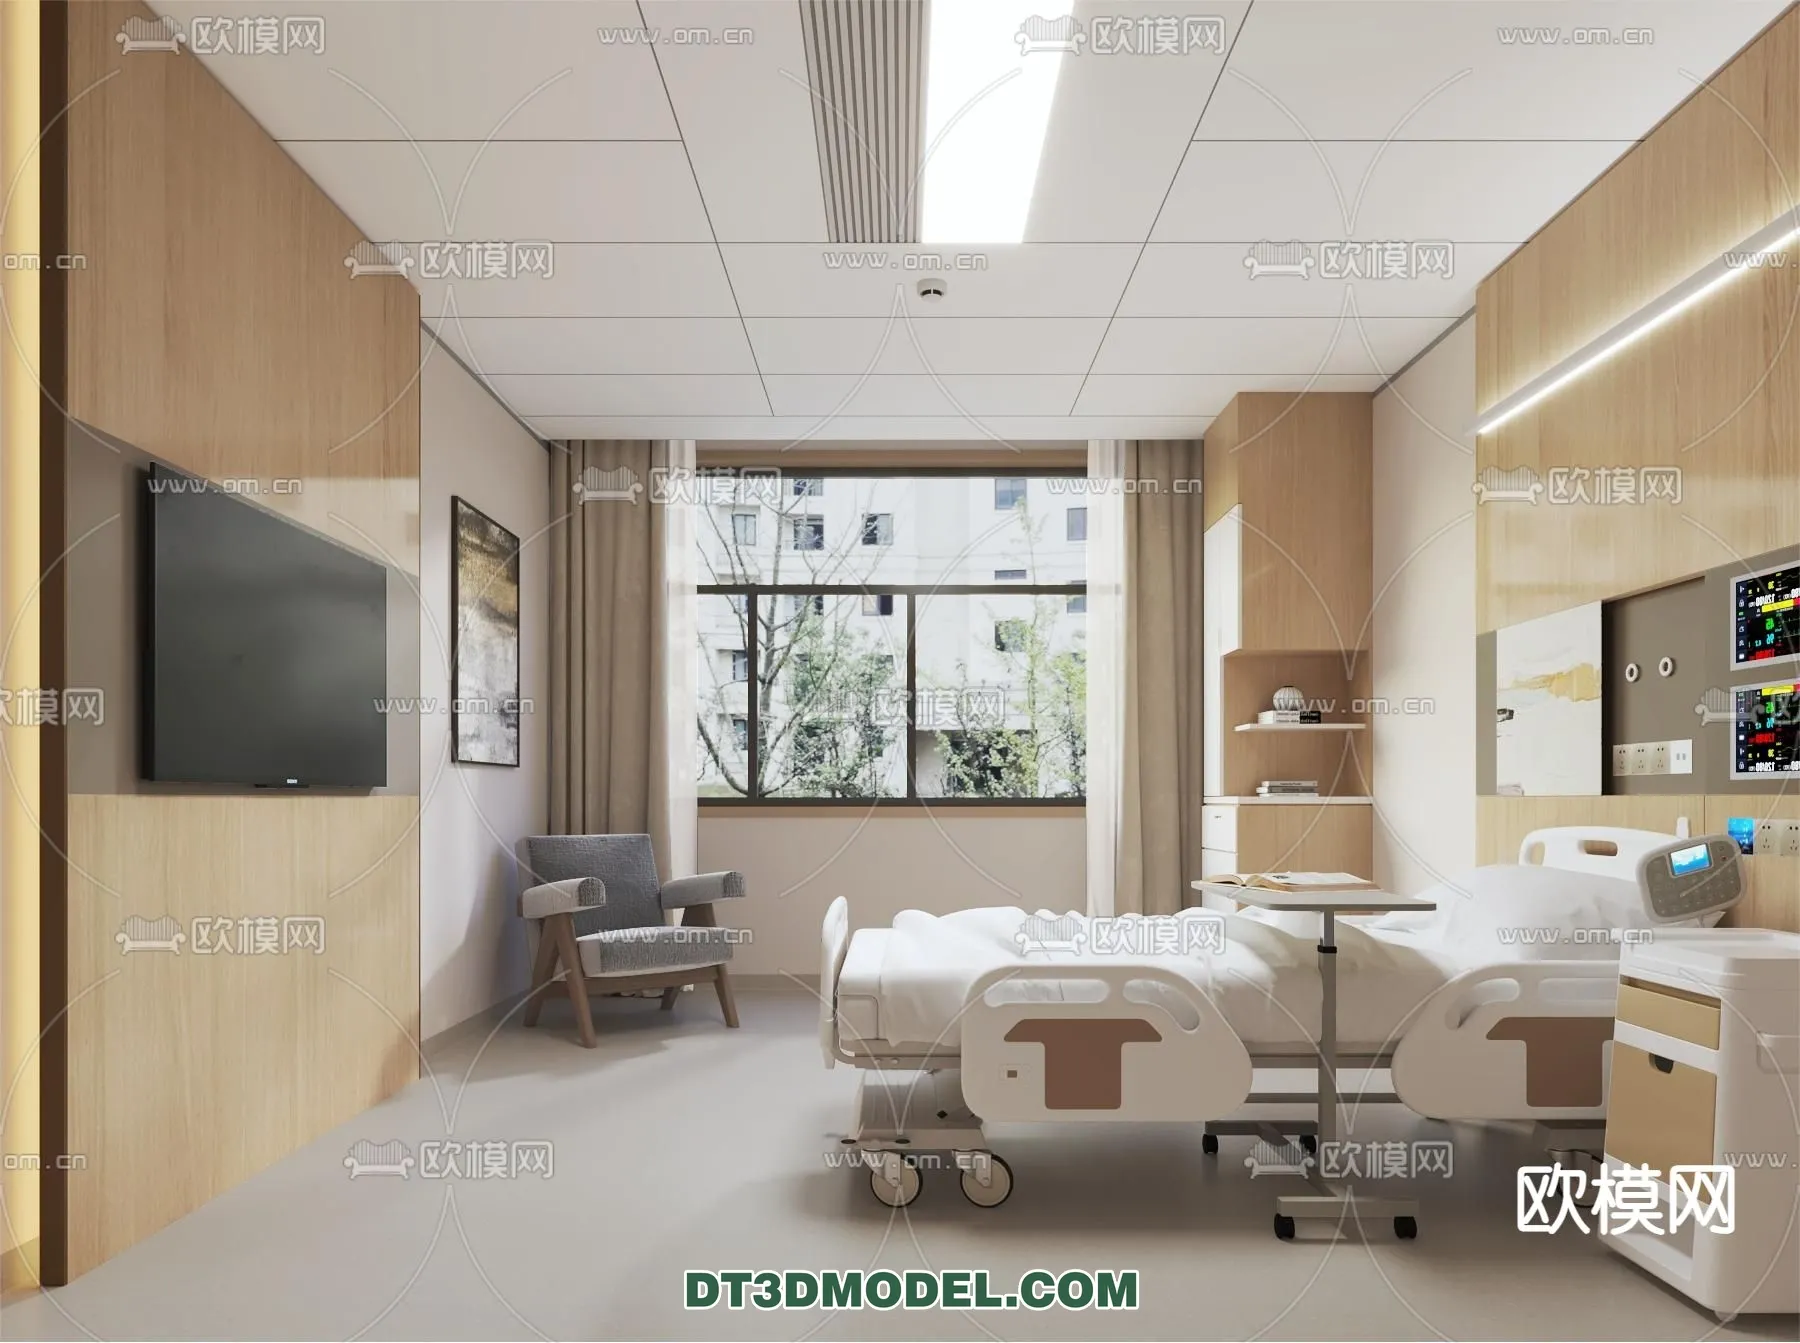 HOSPITAL 3D SCENES – MODERN – 0088